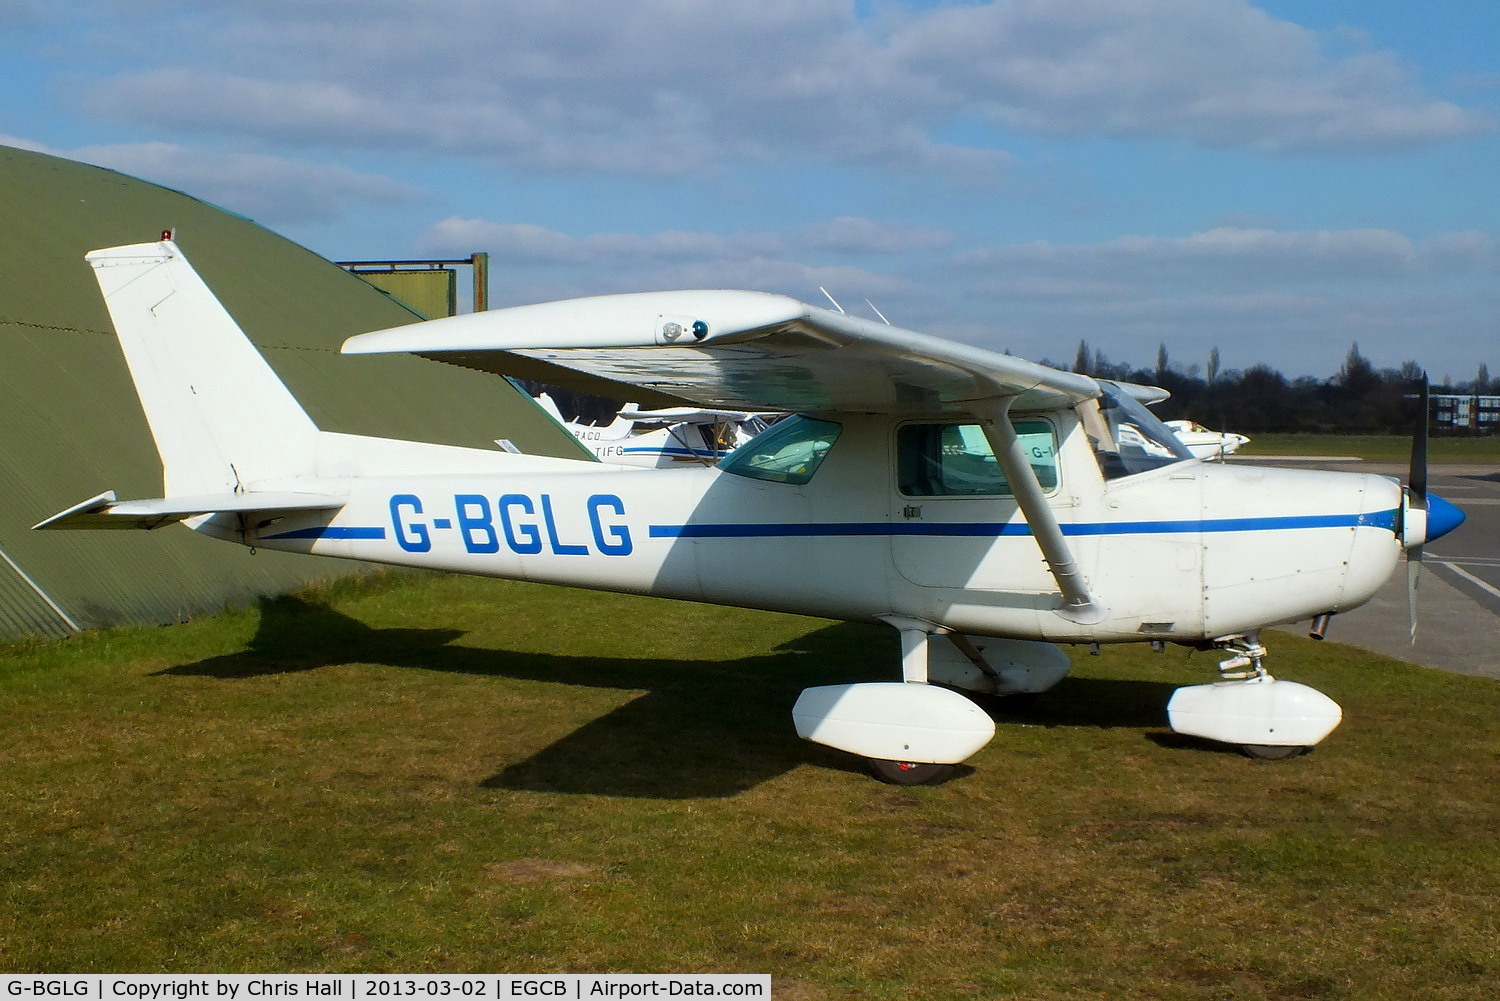 G-BGLG, 1978 Cessna 152 C/N 152-82092, visitor to Barton